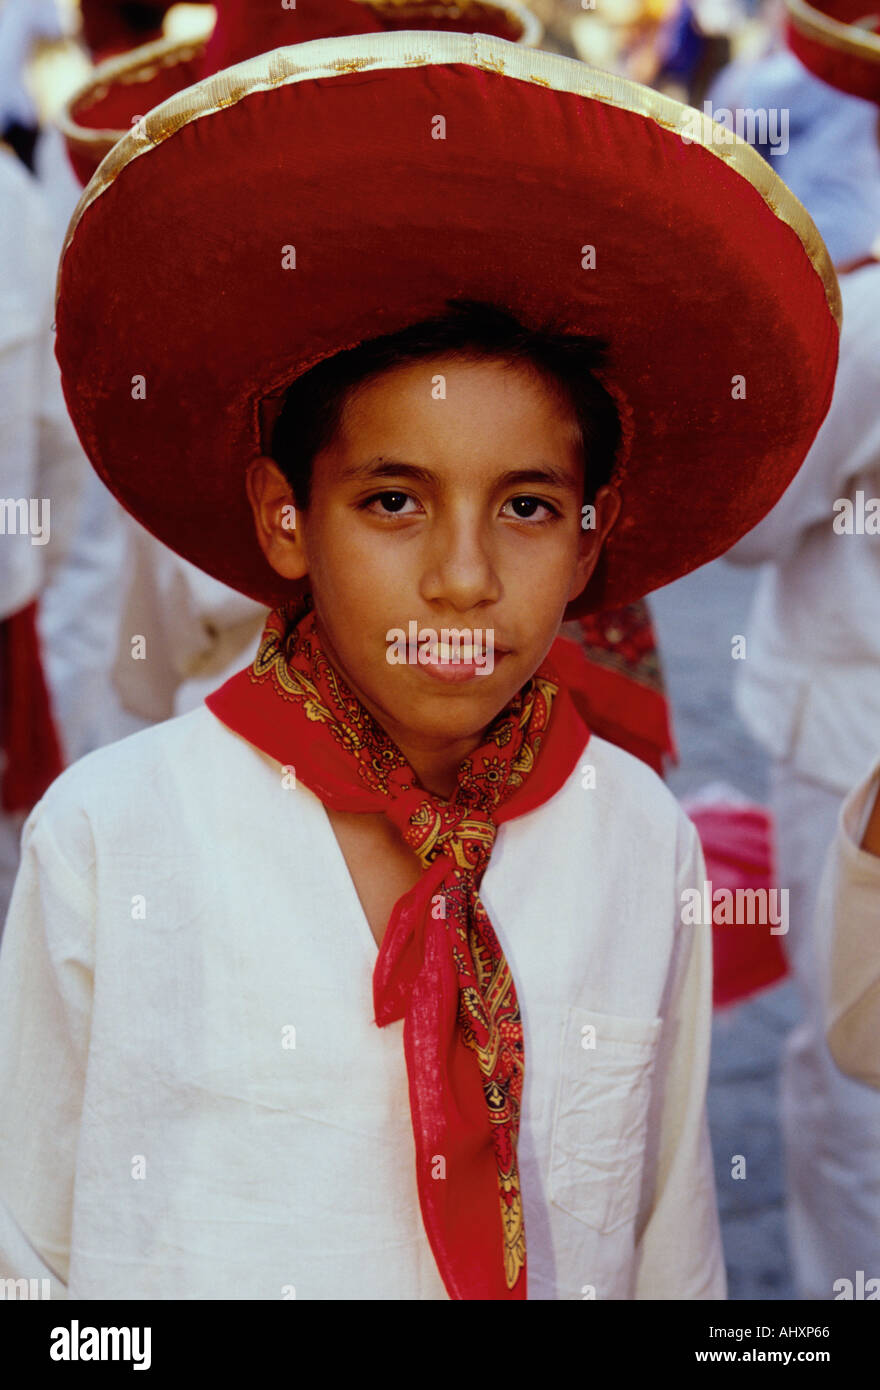 1 garçon mexicain, un garçon mexicain, 1, un garçon mexicain, garçon, jeune, garçon, enfant, portrait, Festival Guelaguetza, Oaxaca, Oaxaca de Juarez, Oaxaca, Mexique Banque D'Images